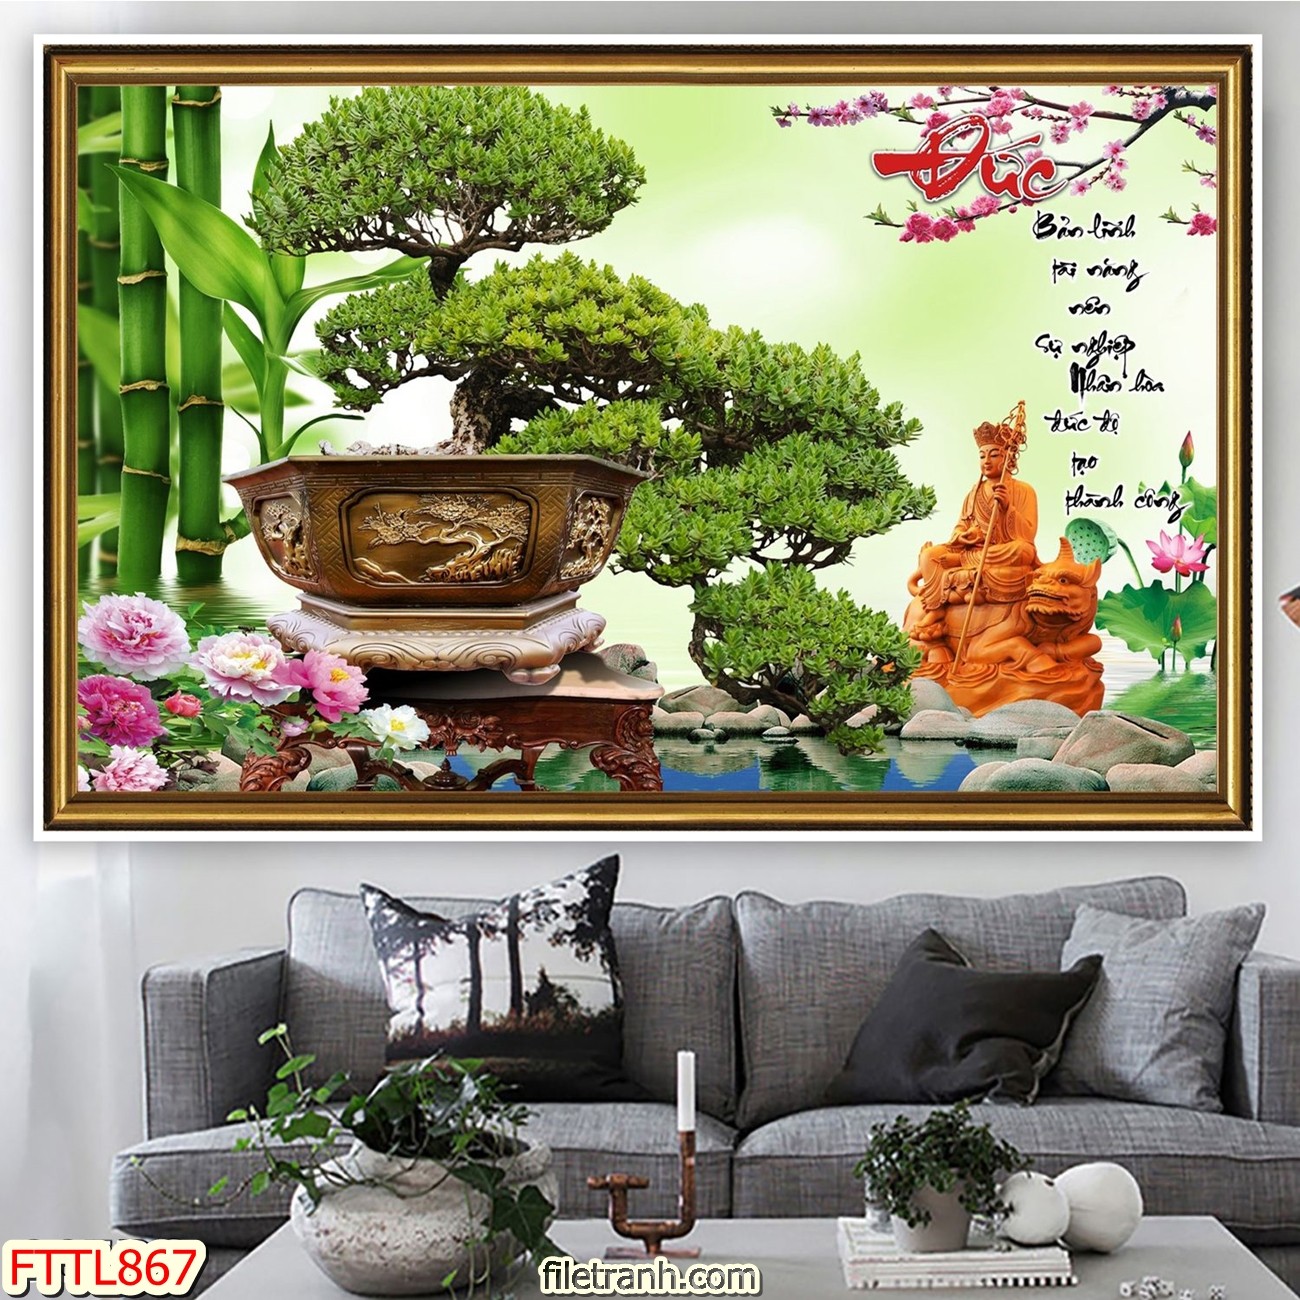 https://filetranh.com/file-tranh-chau-mai-bonsai/file-tranh-chau-mai-bonsai-fttl867.html